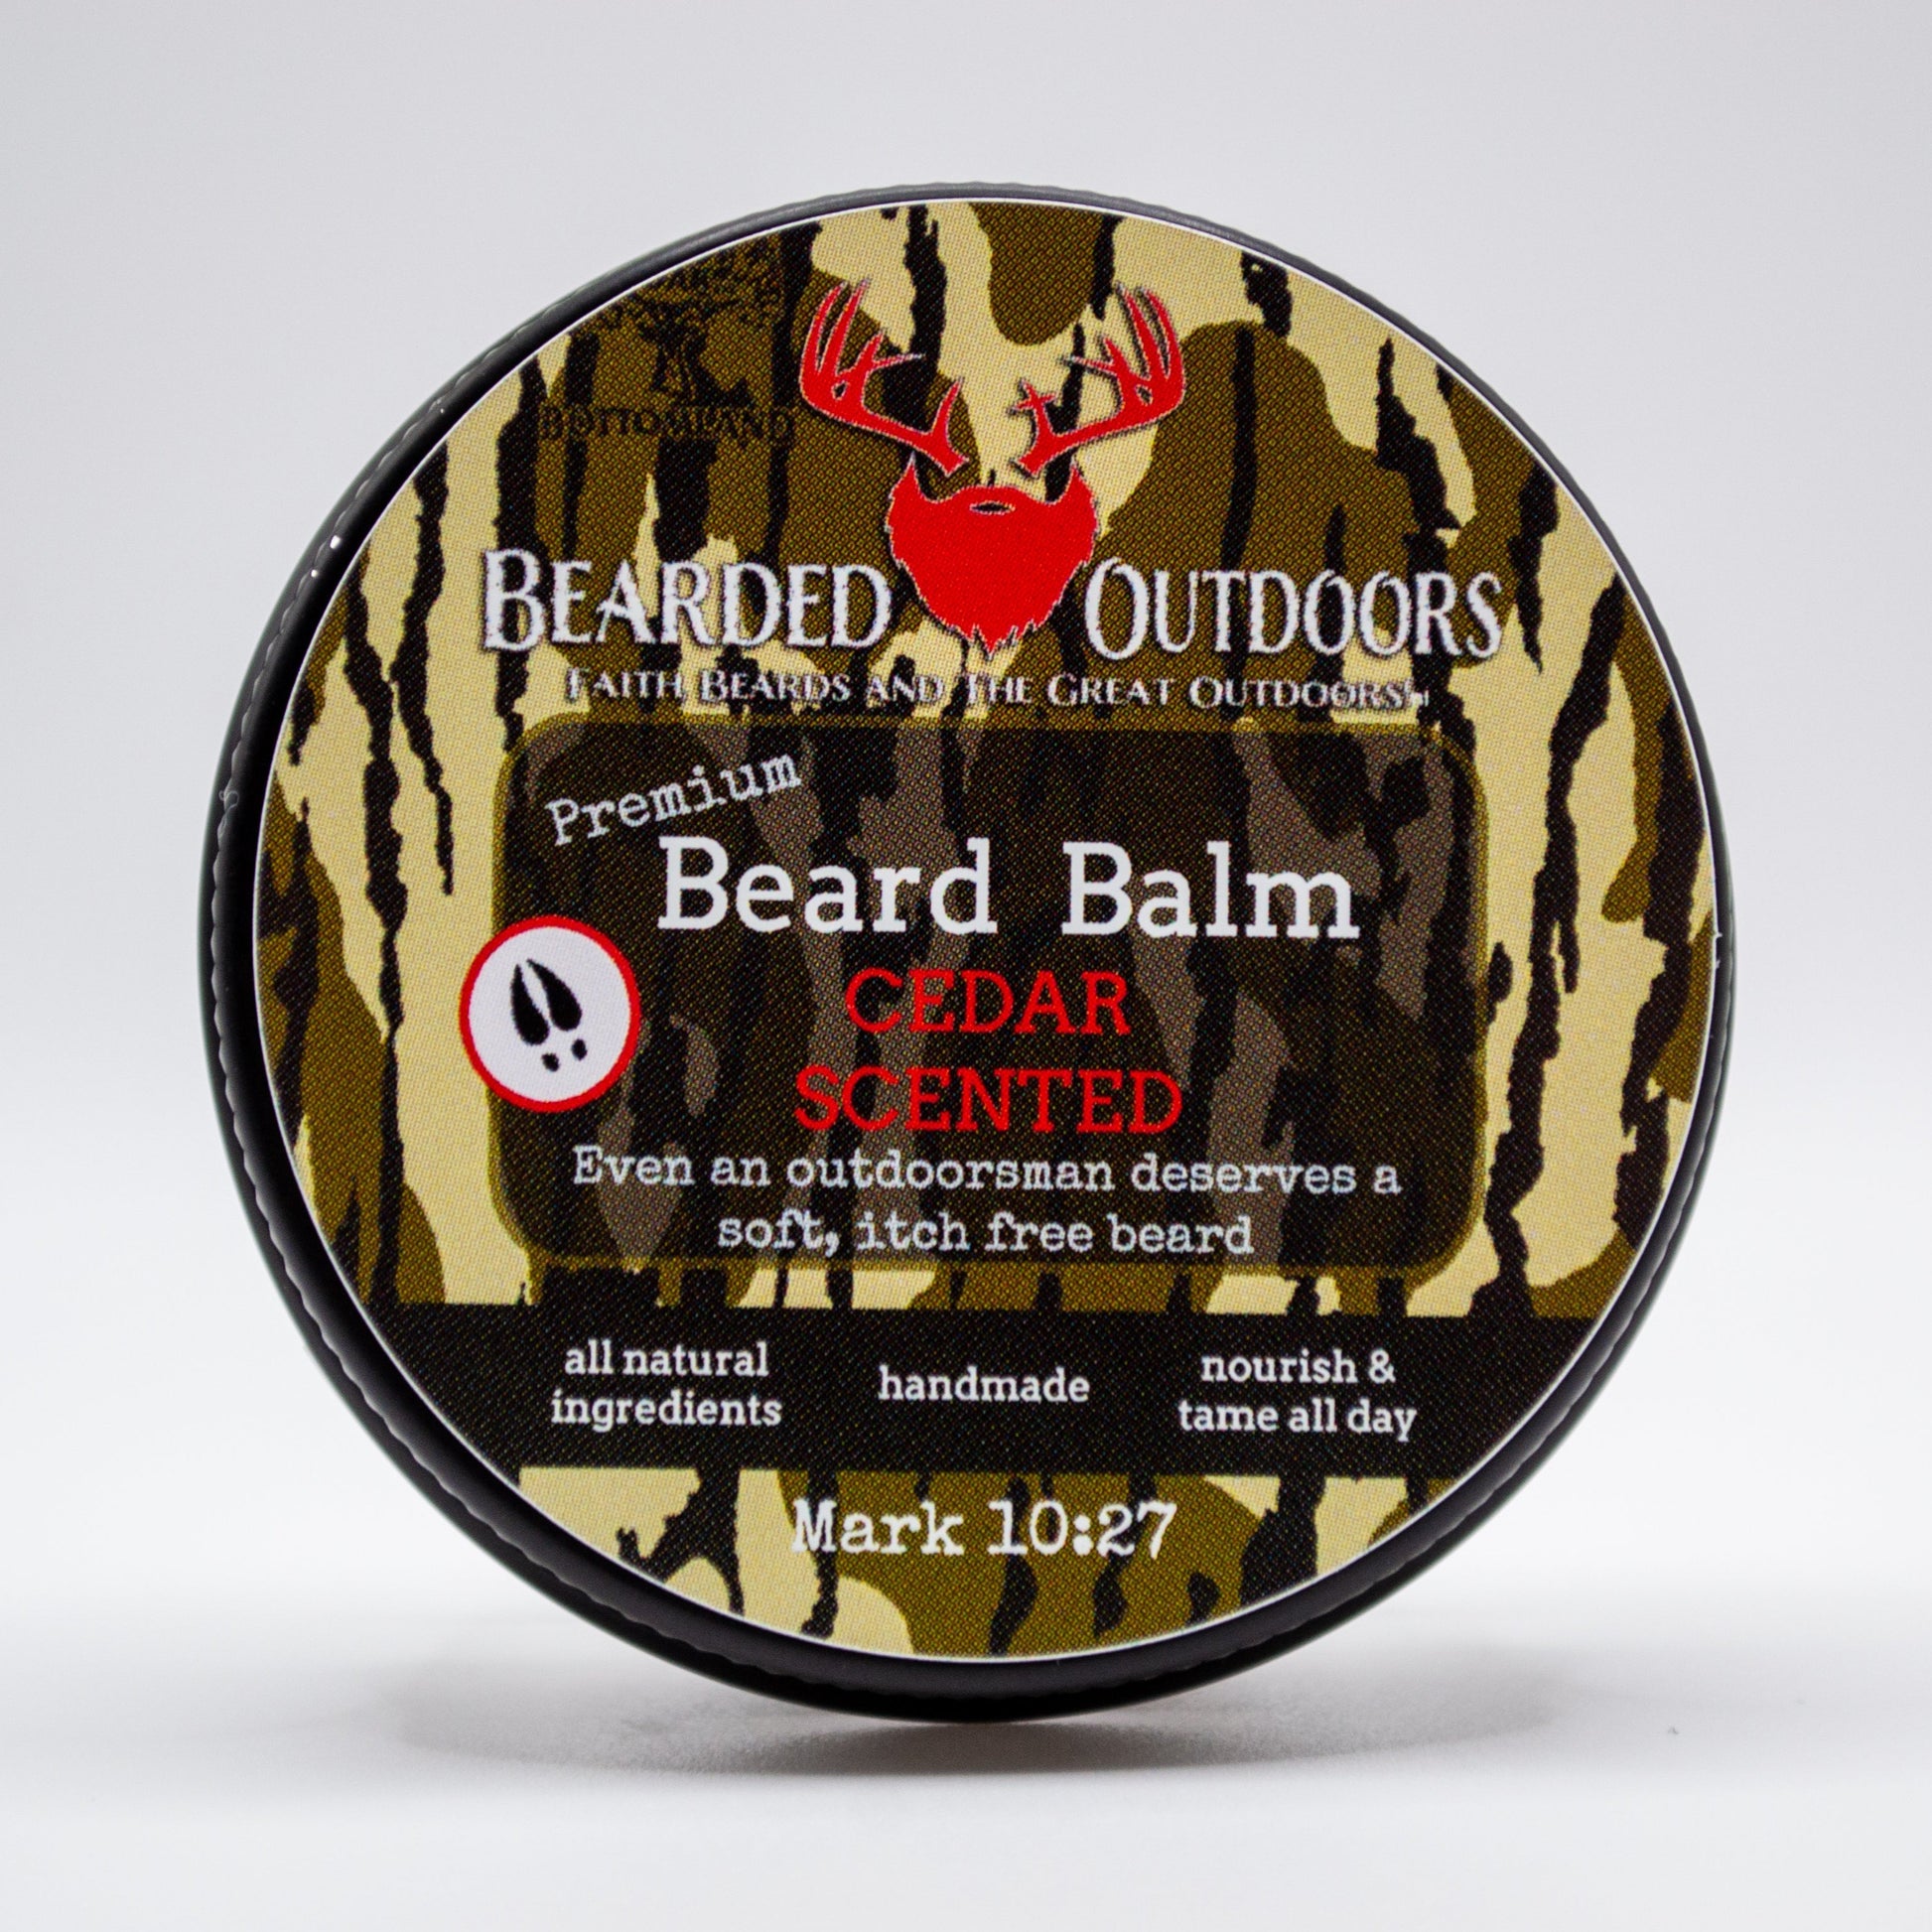 Mossy Oak Cedar Scented Premium Beard Balm wrapped in Bottomland Camo by Bearded Outdoors